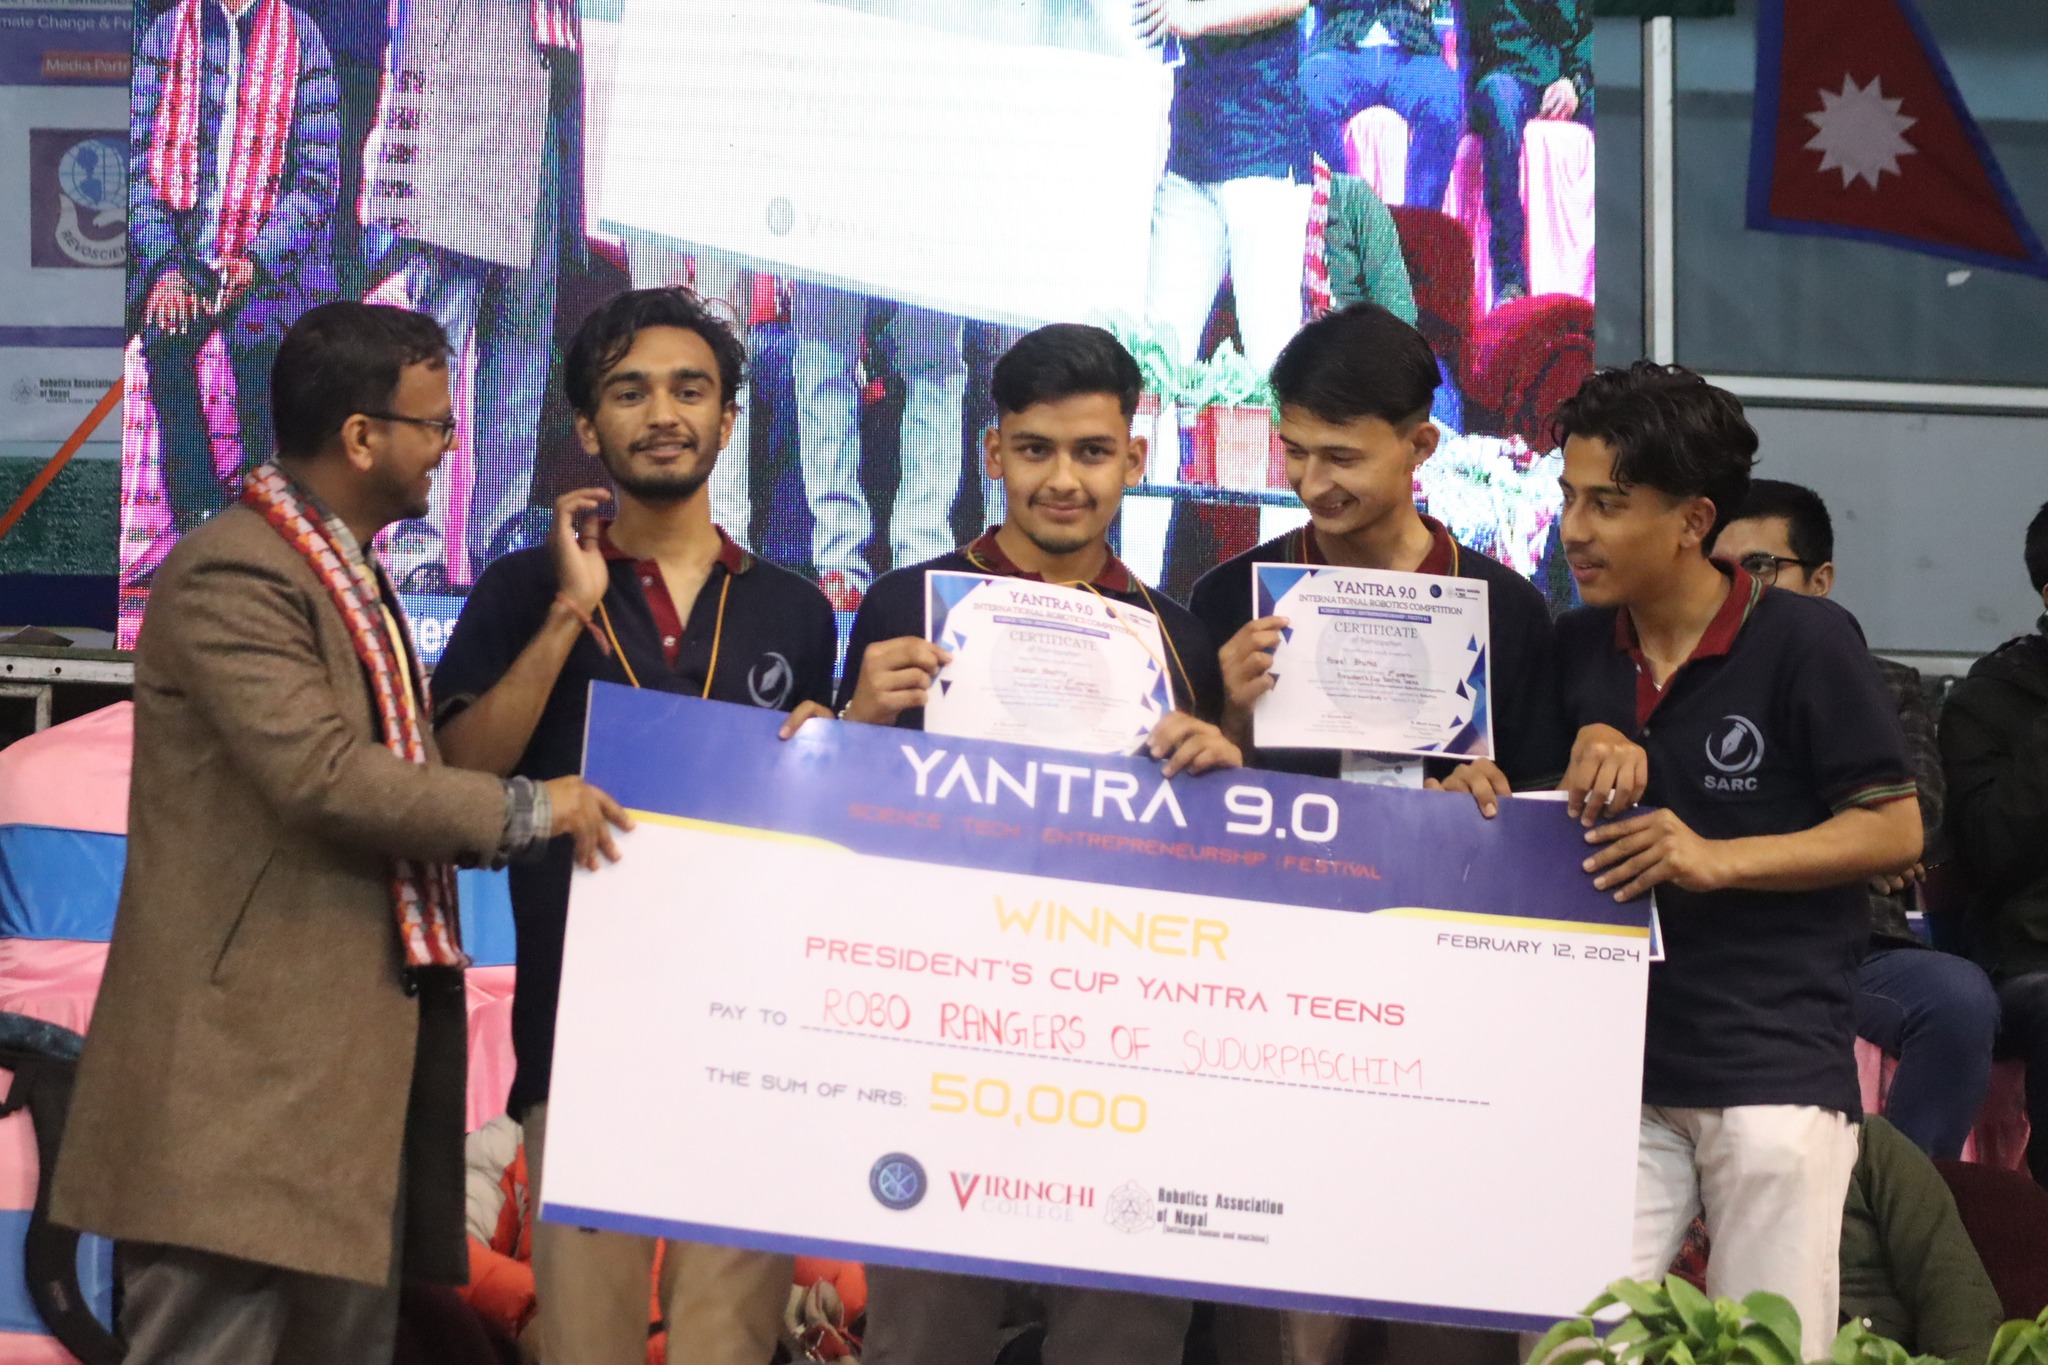 Presidents Cup Yantra Teens Winner - Robo Rangers of Sudurpaschim